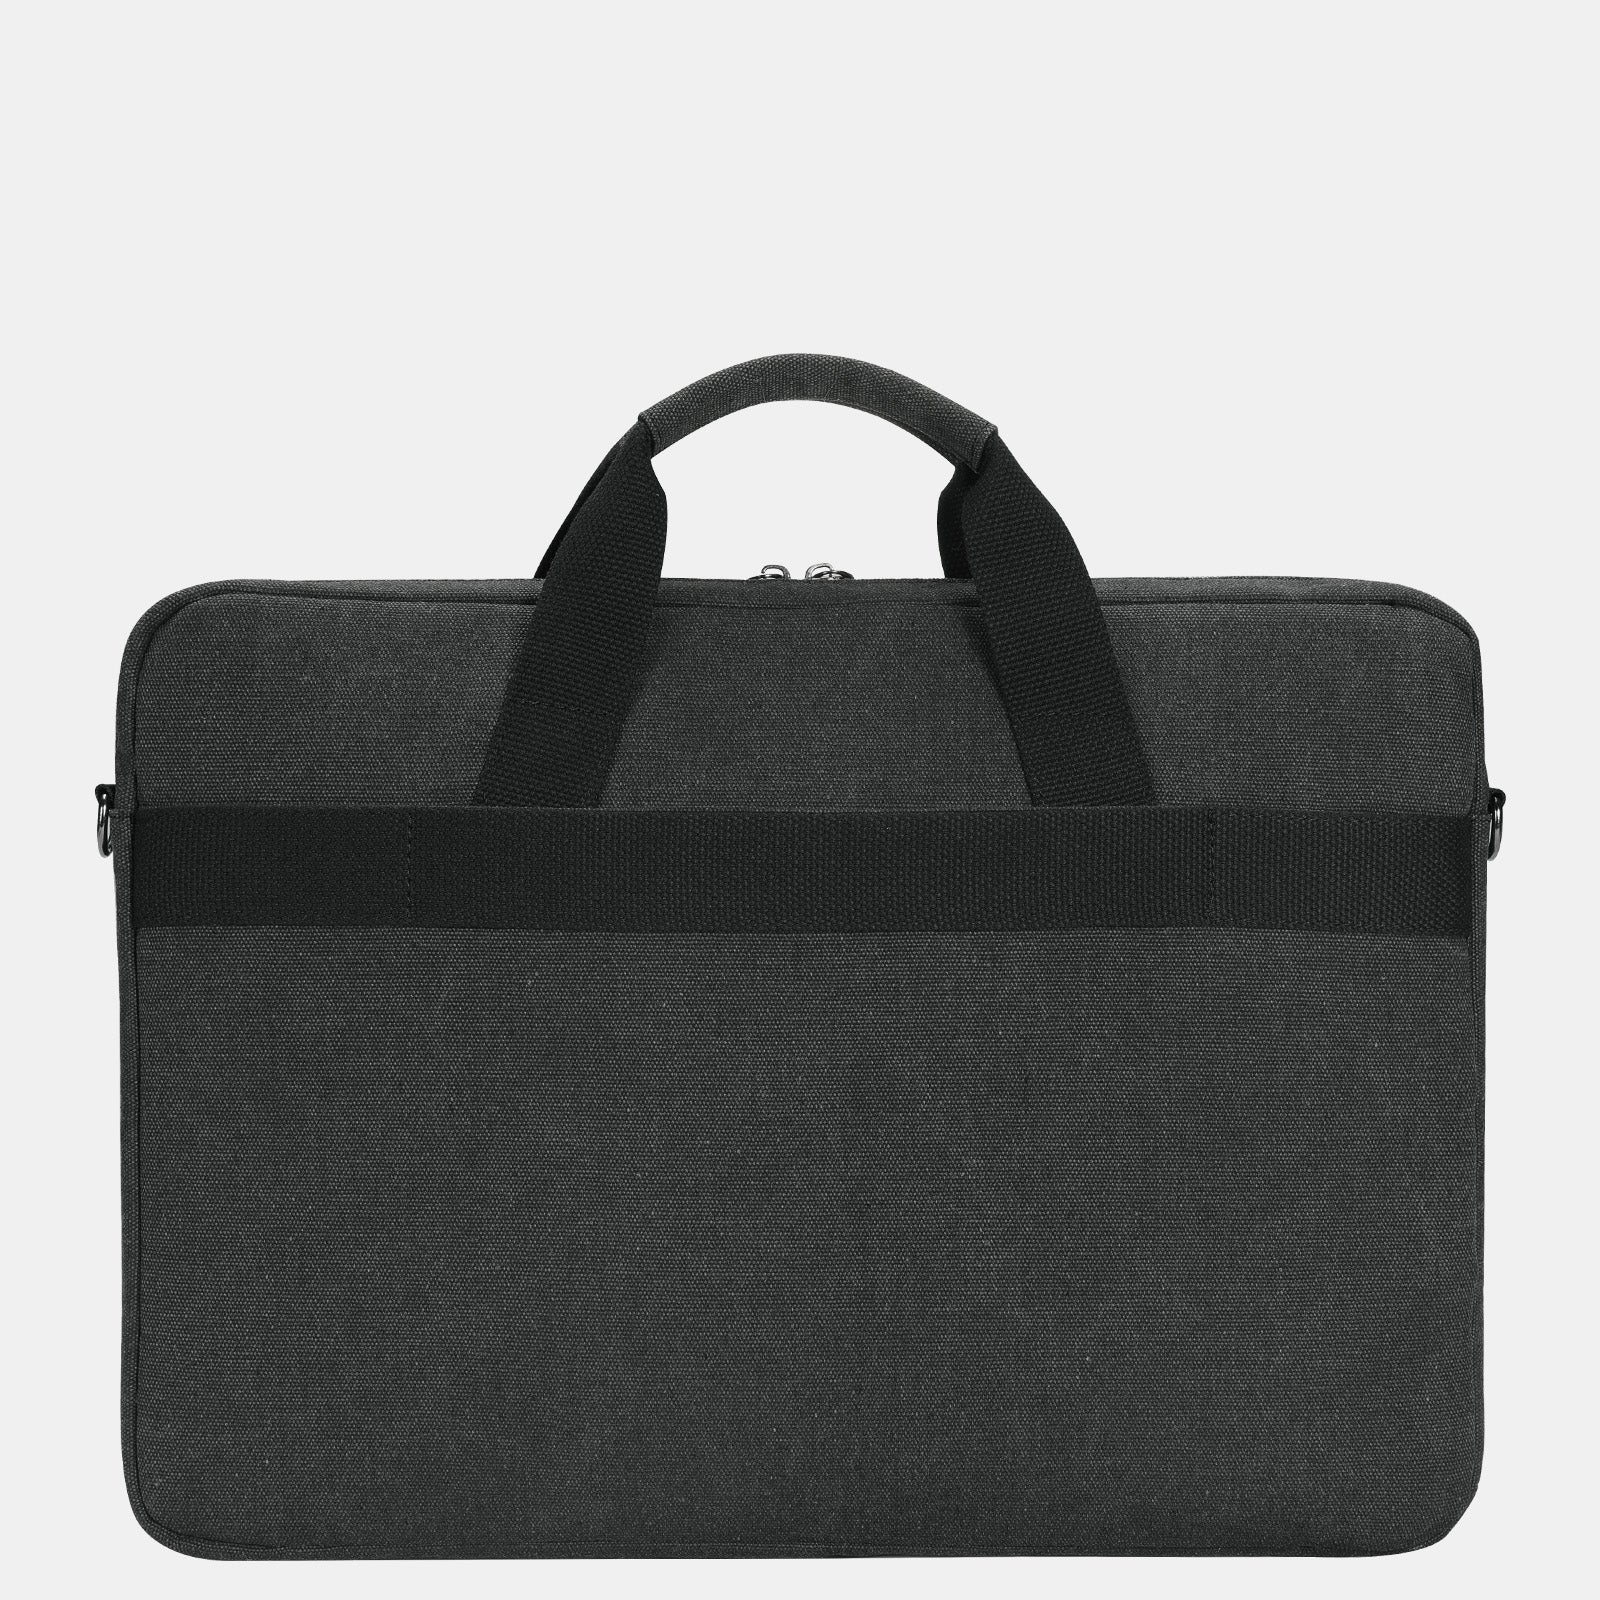 Estarer Lightweight Briefcase Laptop Bag